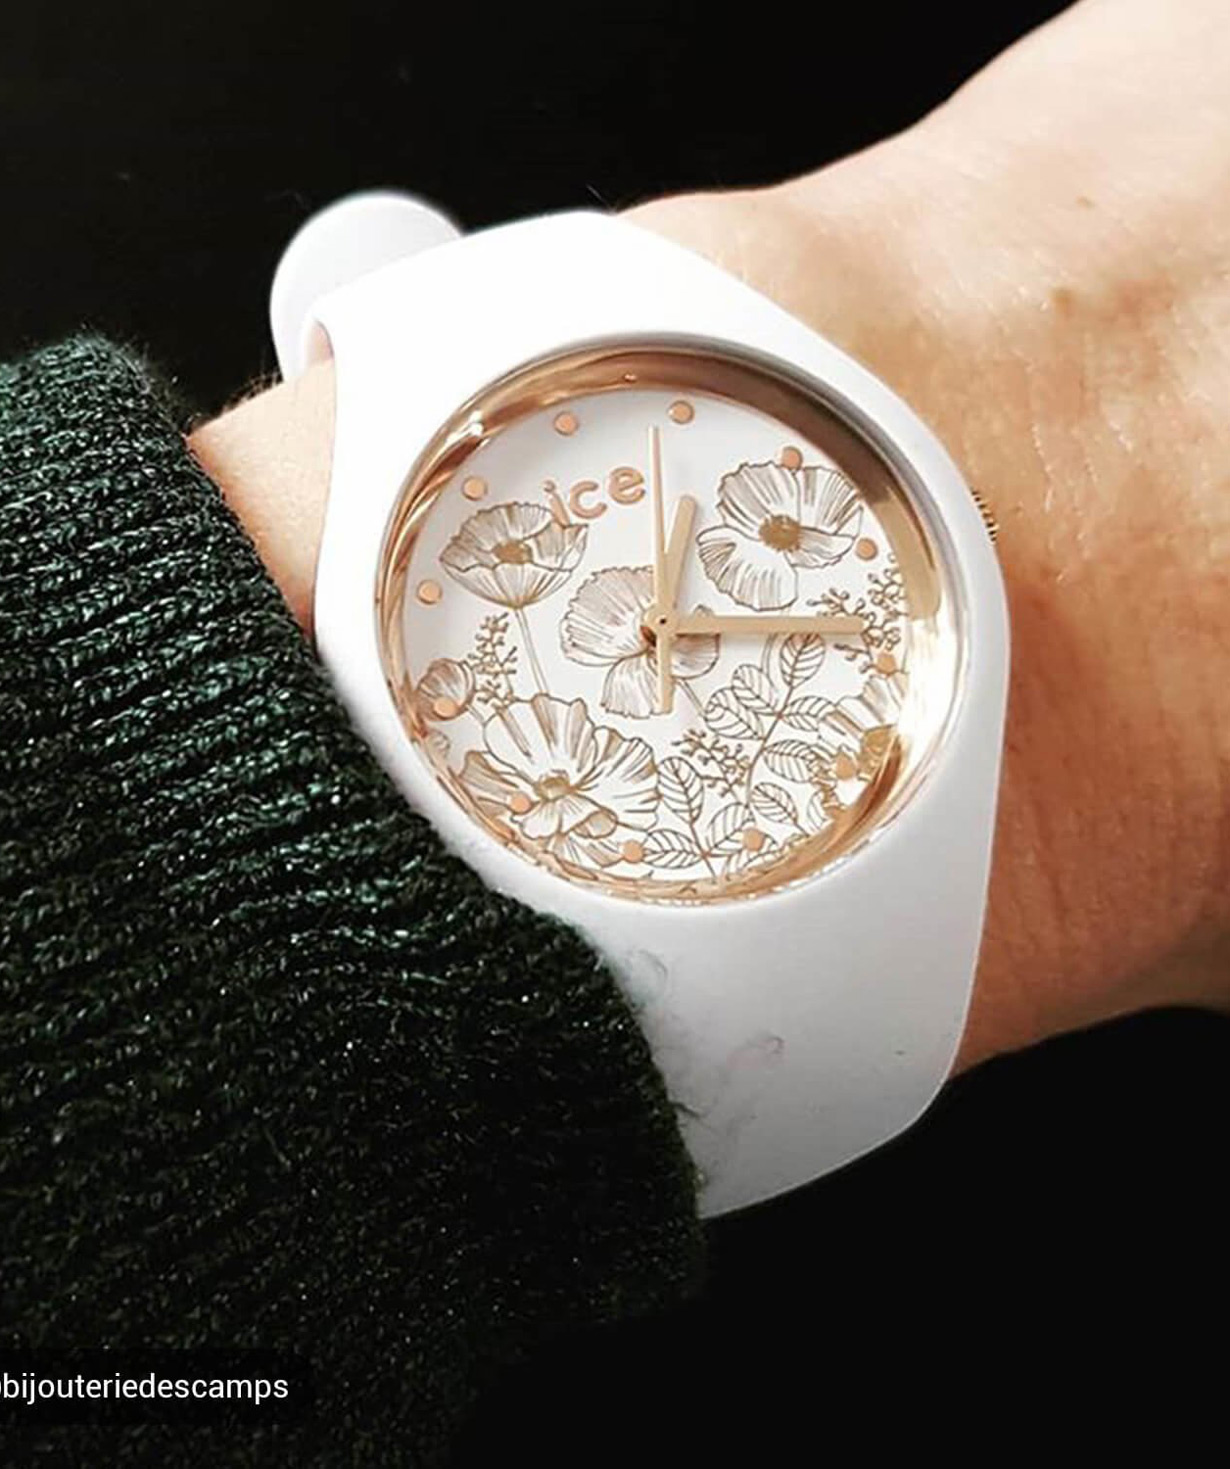 Watch `Ice-Watch` ICE flower - Spring white